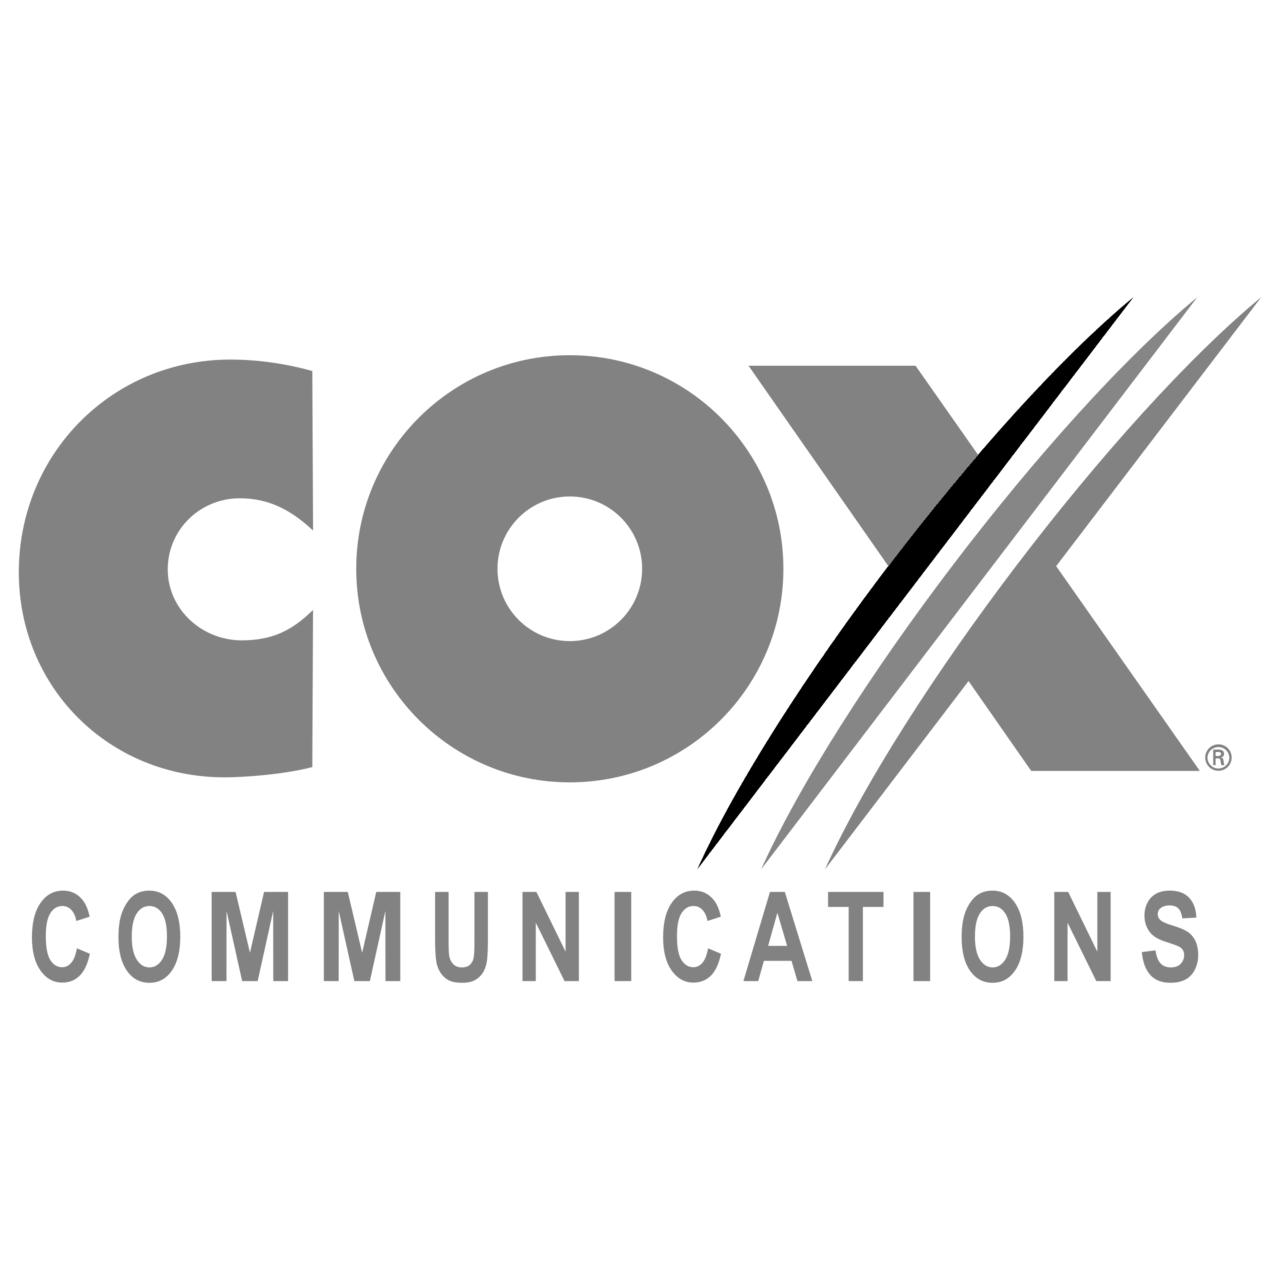 cox-communications-logo-black-and-white